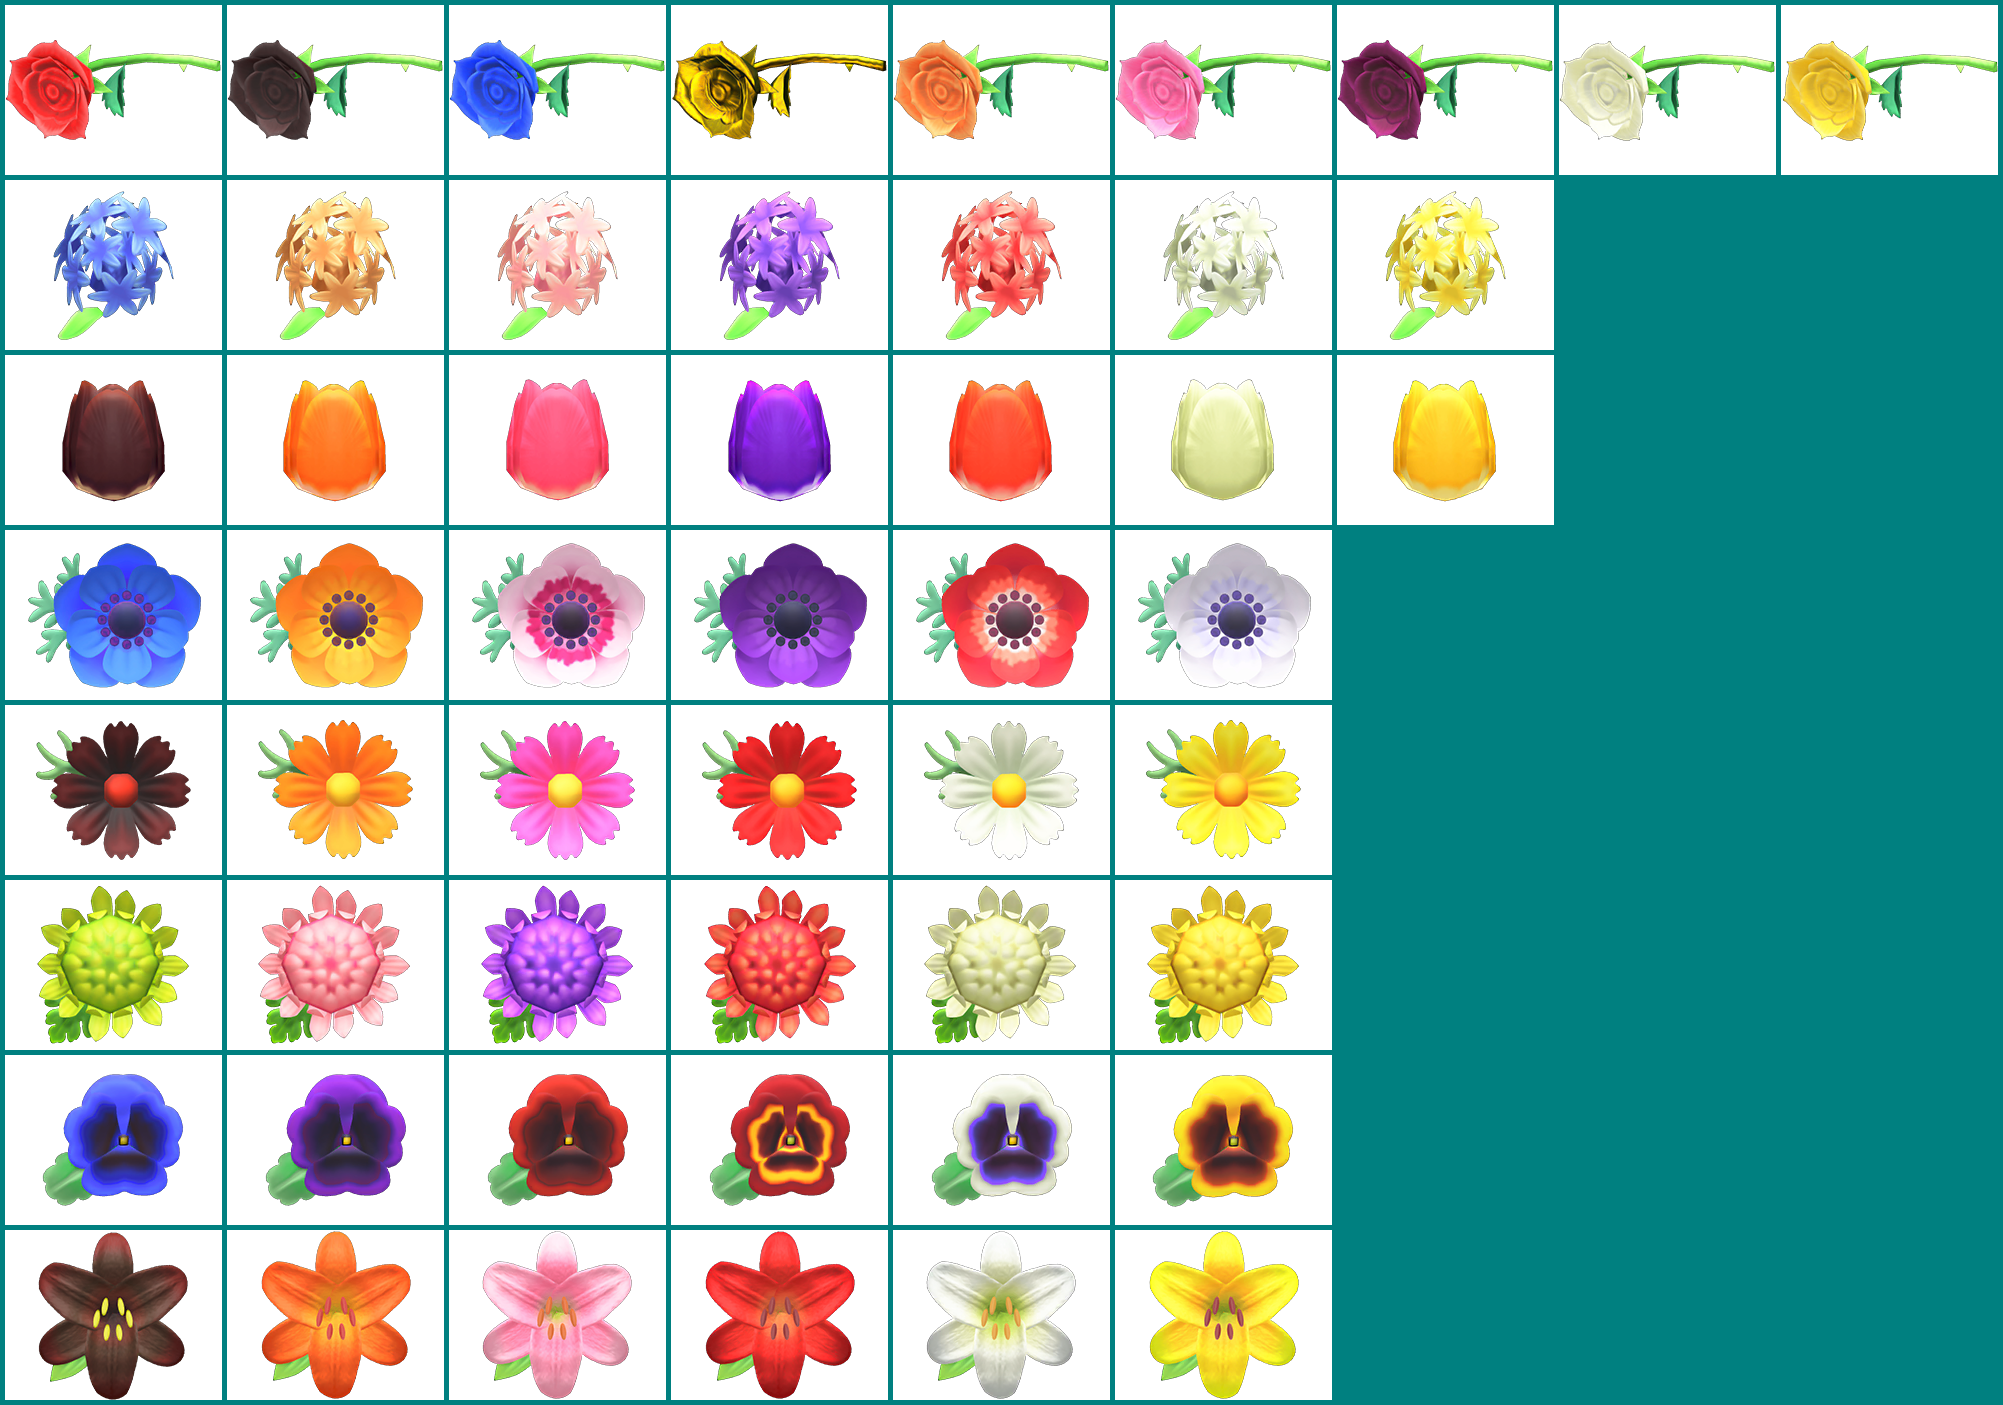 Animal Crossing: New Horizons - Flower Icons